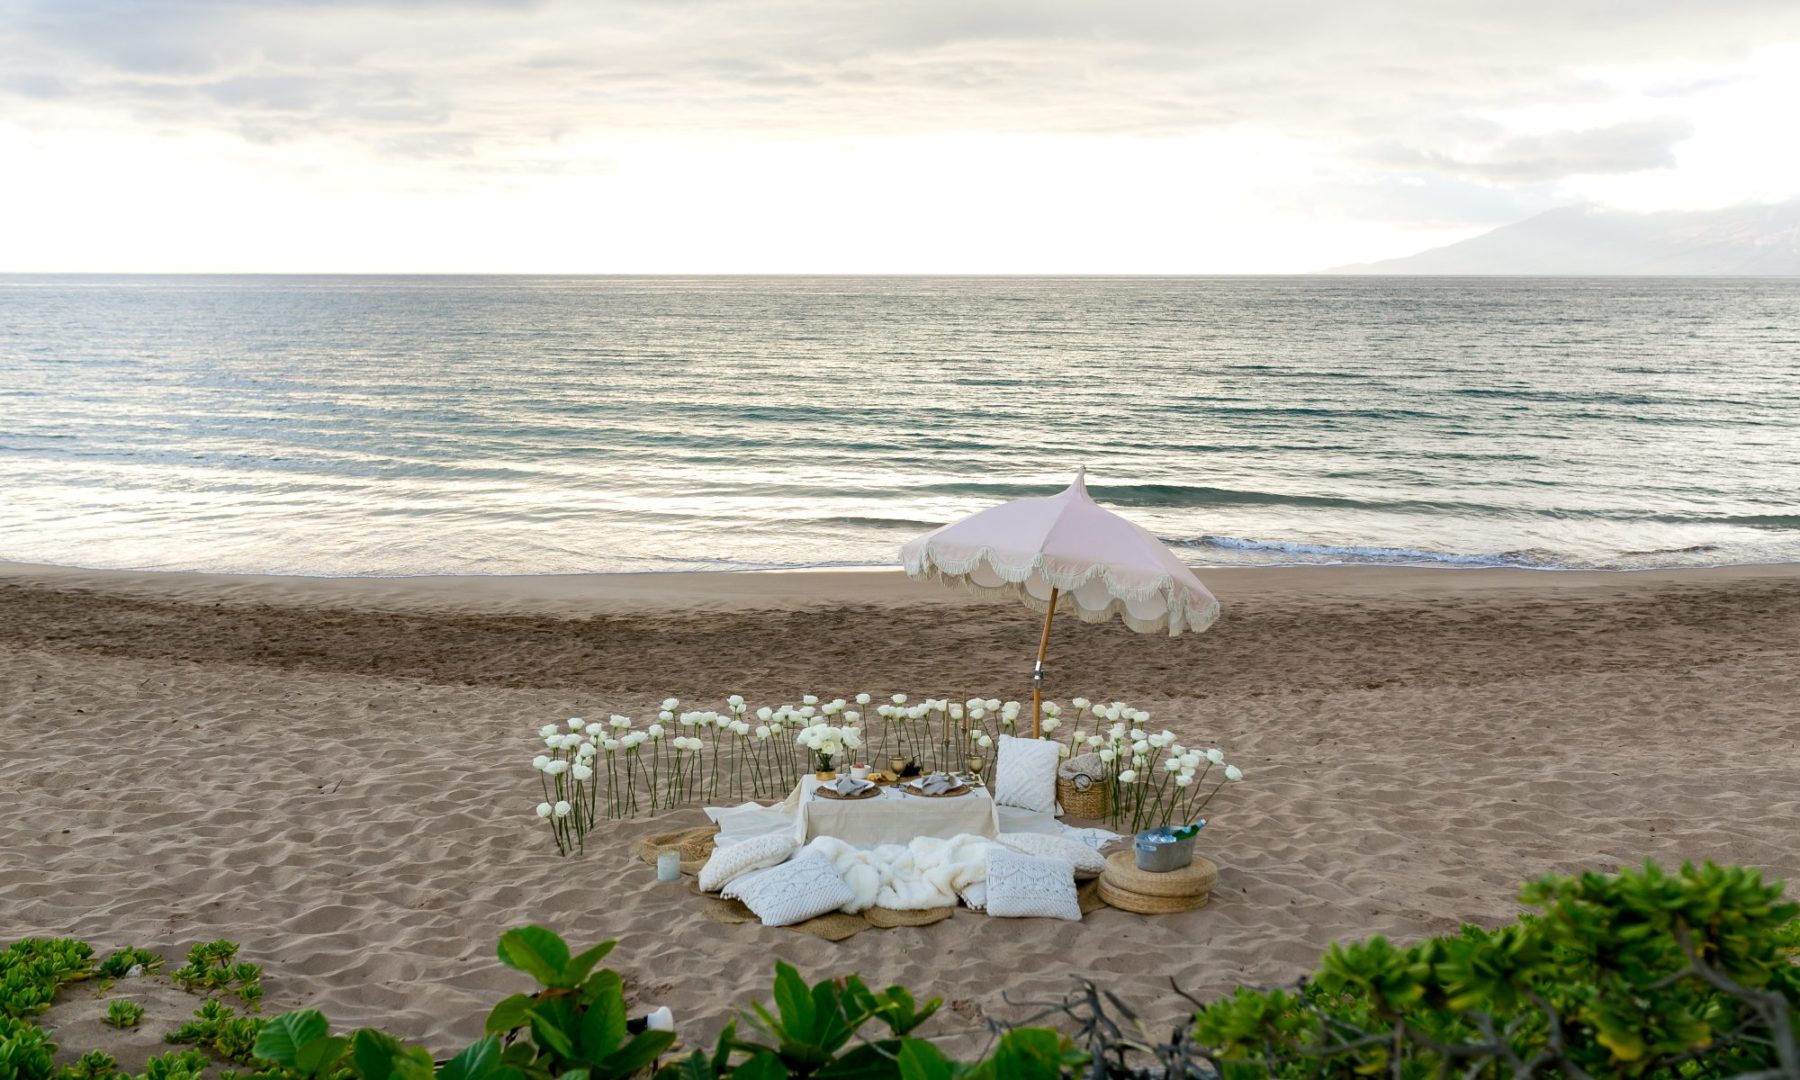 Romantic_Maui_Beach_Picnic